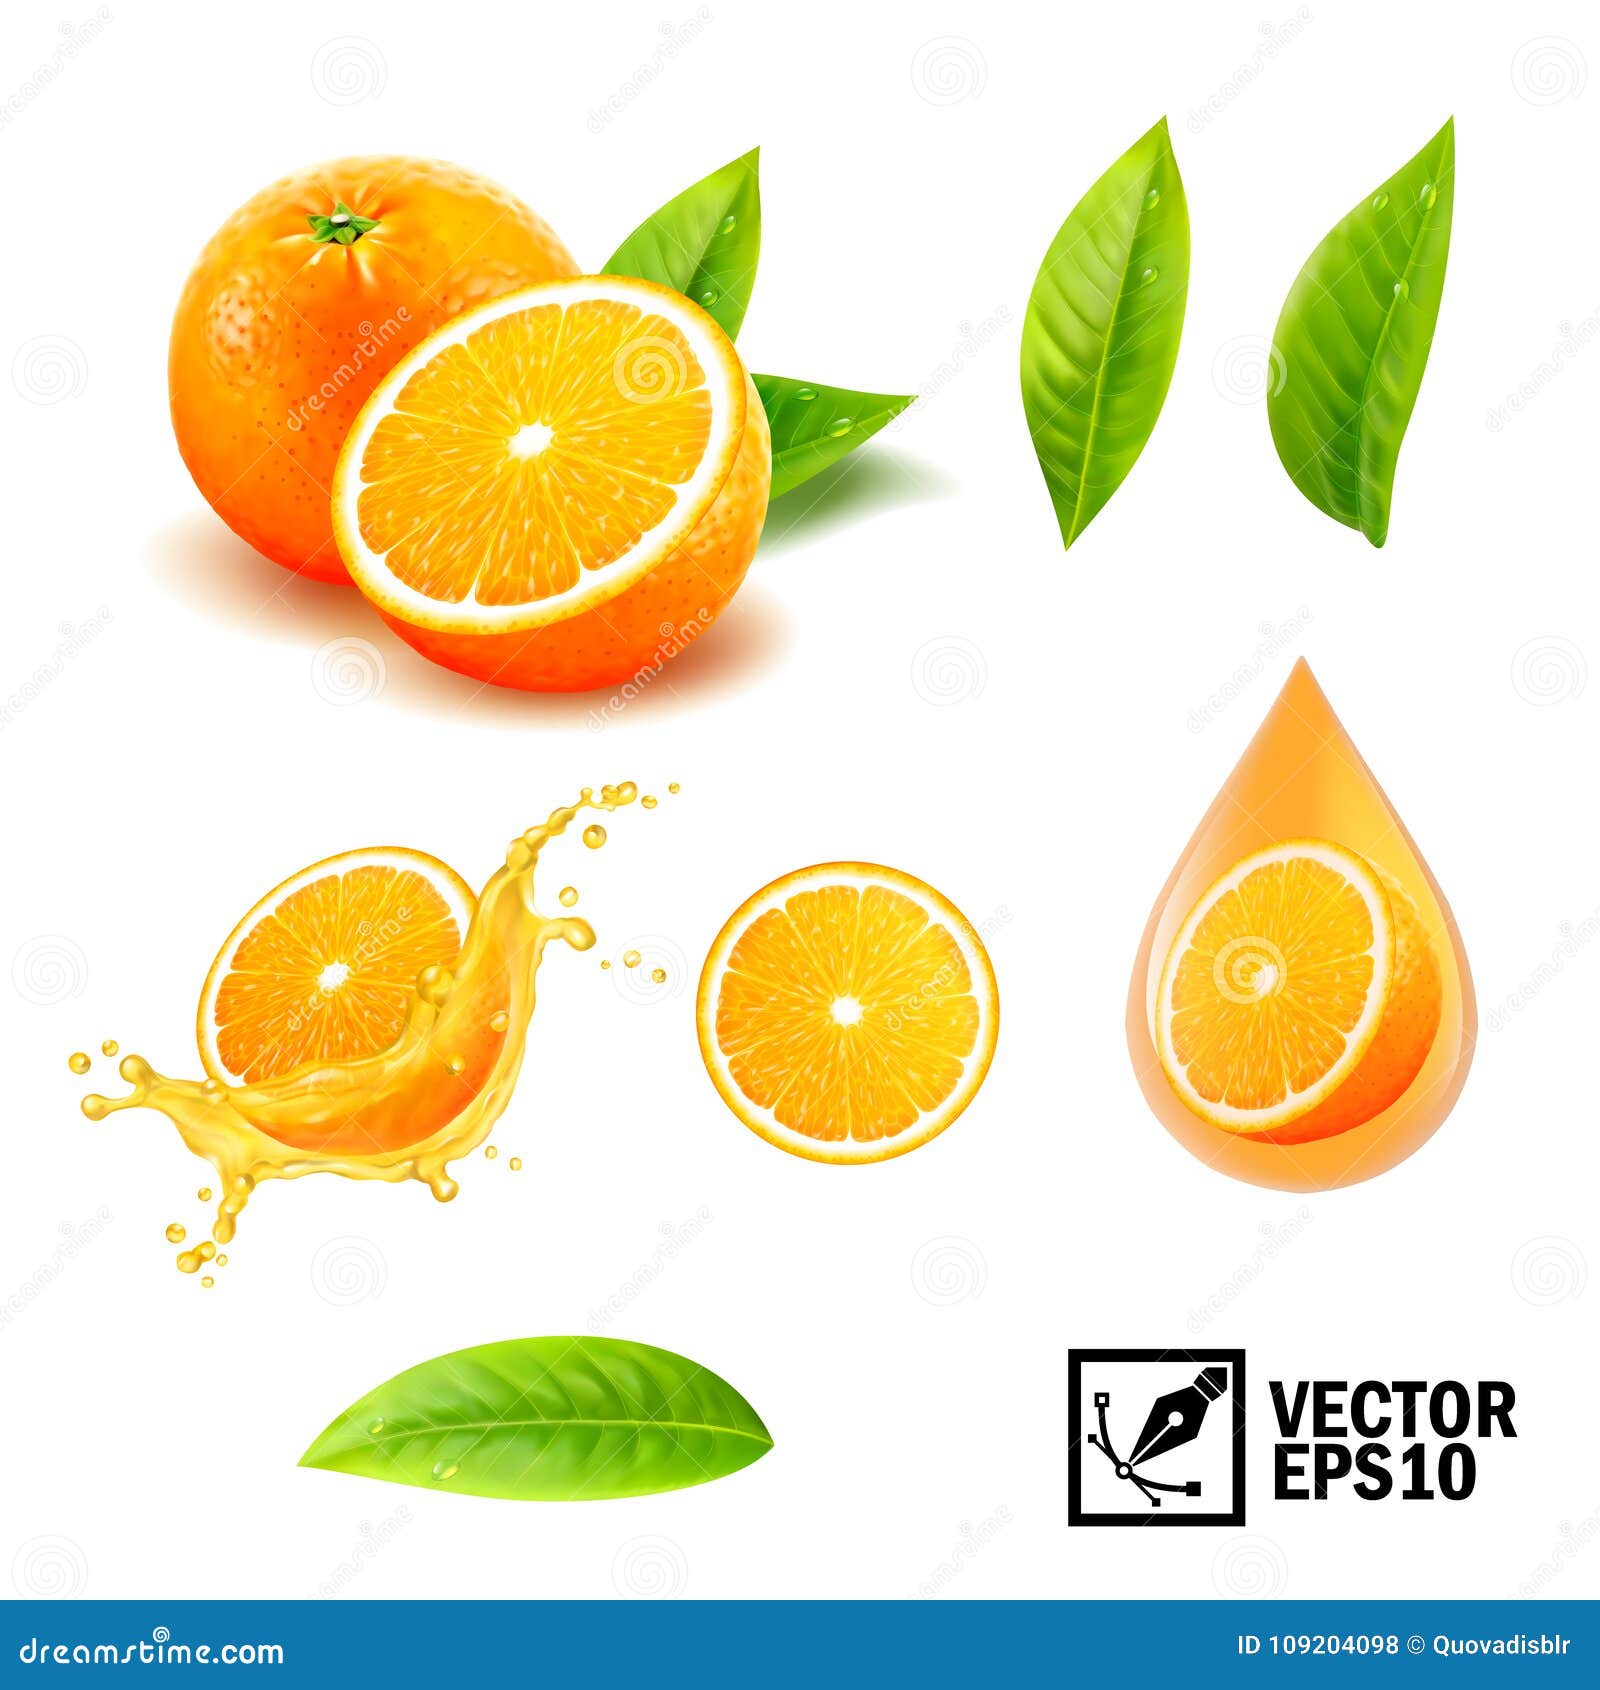 3d realistic  set of s whole orange, sliced orange, splash orange juice, drop orange oil, leaves